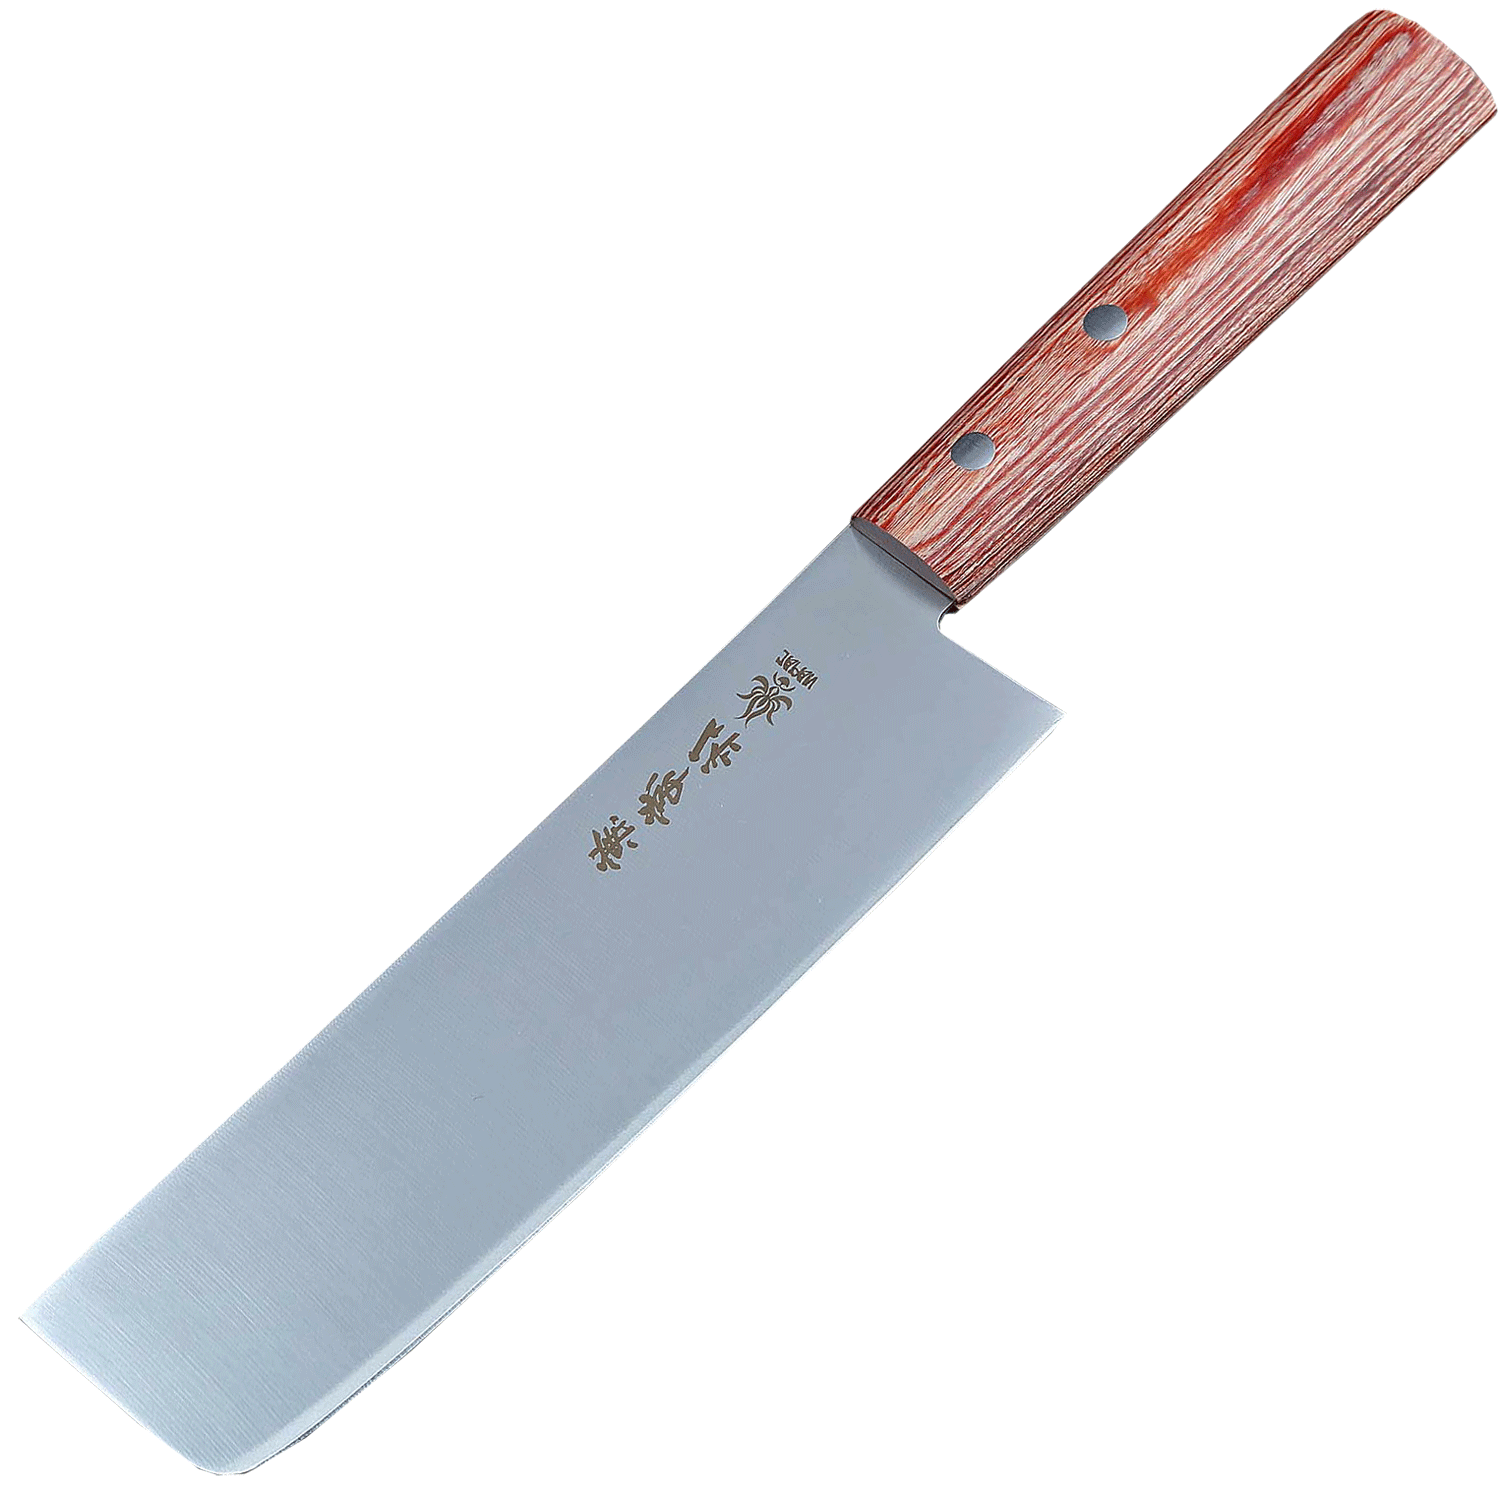 Нож кухонный Kanetsune Usabagata 165 мм, сталь DSR-1K6, рукоять pakka wood